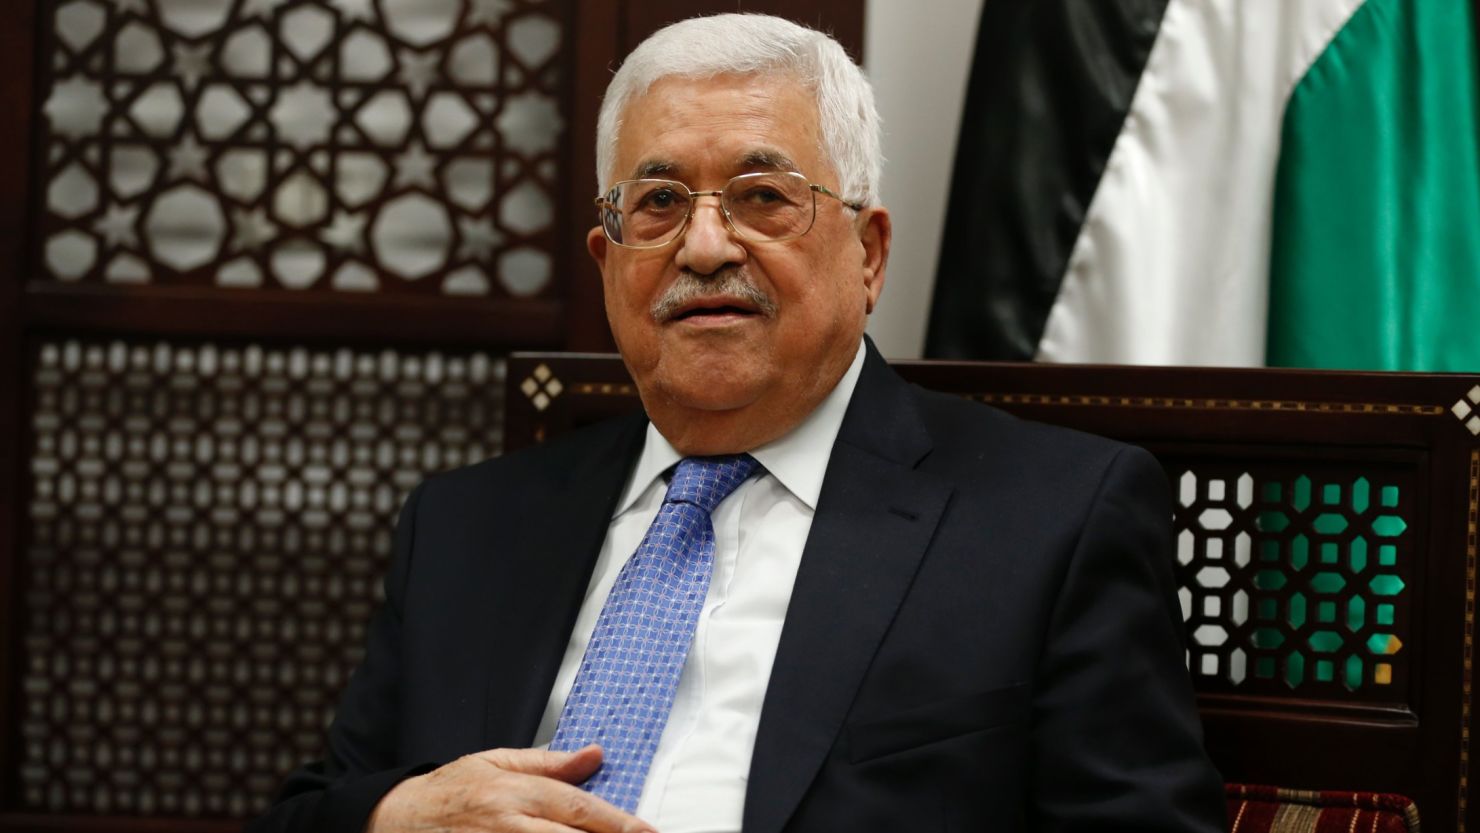 Palestinian Authority President Mahmoud Abbas is in a hospital following cardiac catheterization.